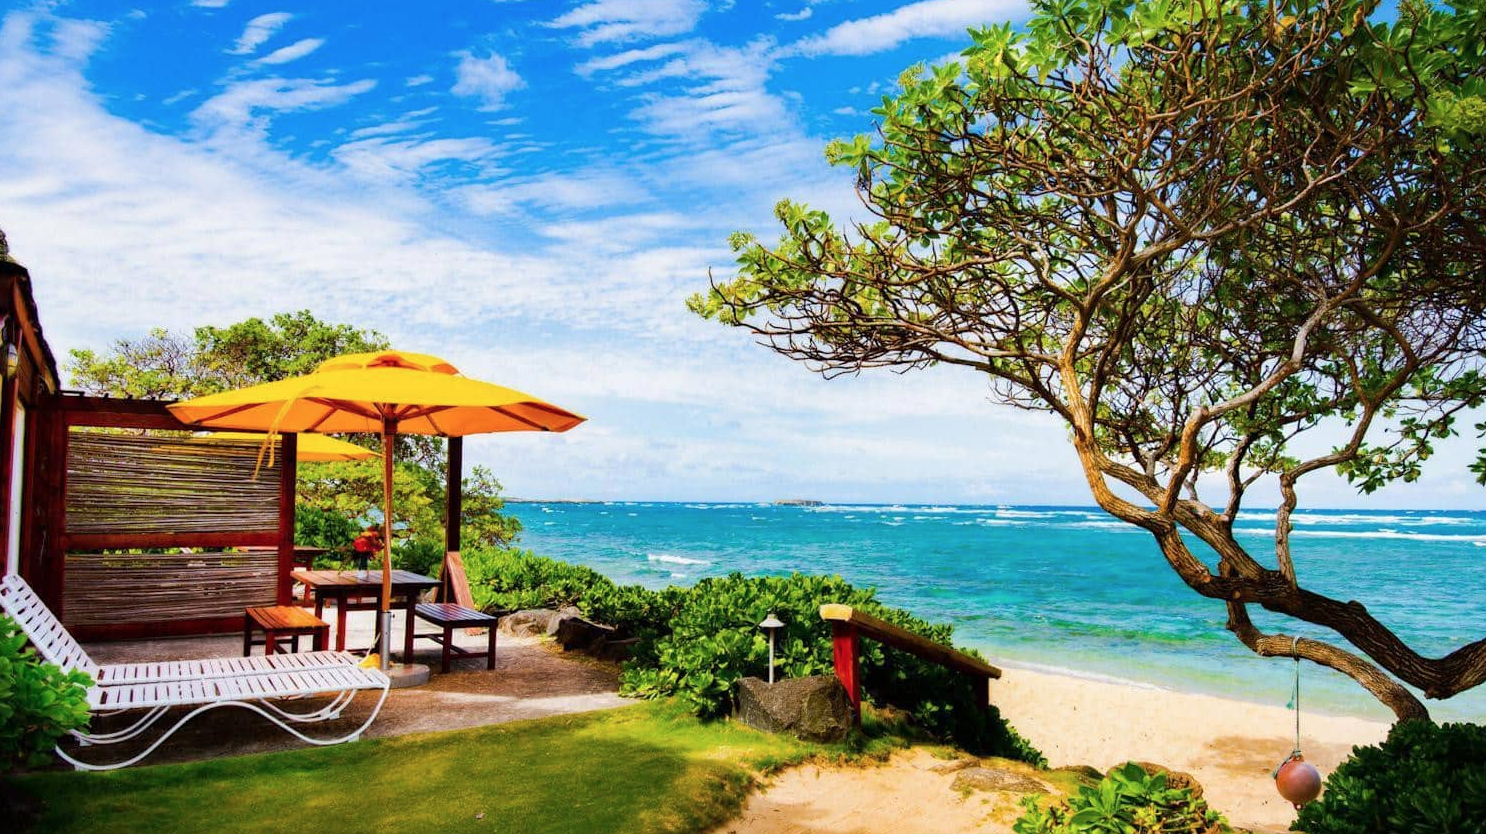  North Shore Oahu beachfront villa of six beach bungalows - Laie, Oahu, Hawaii